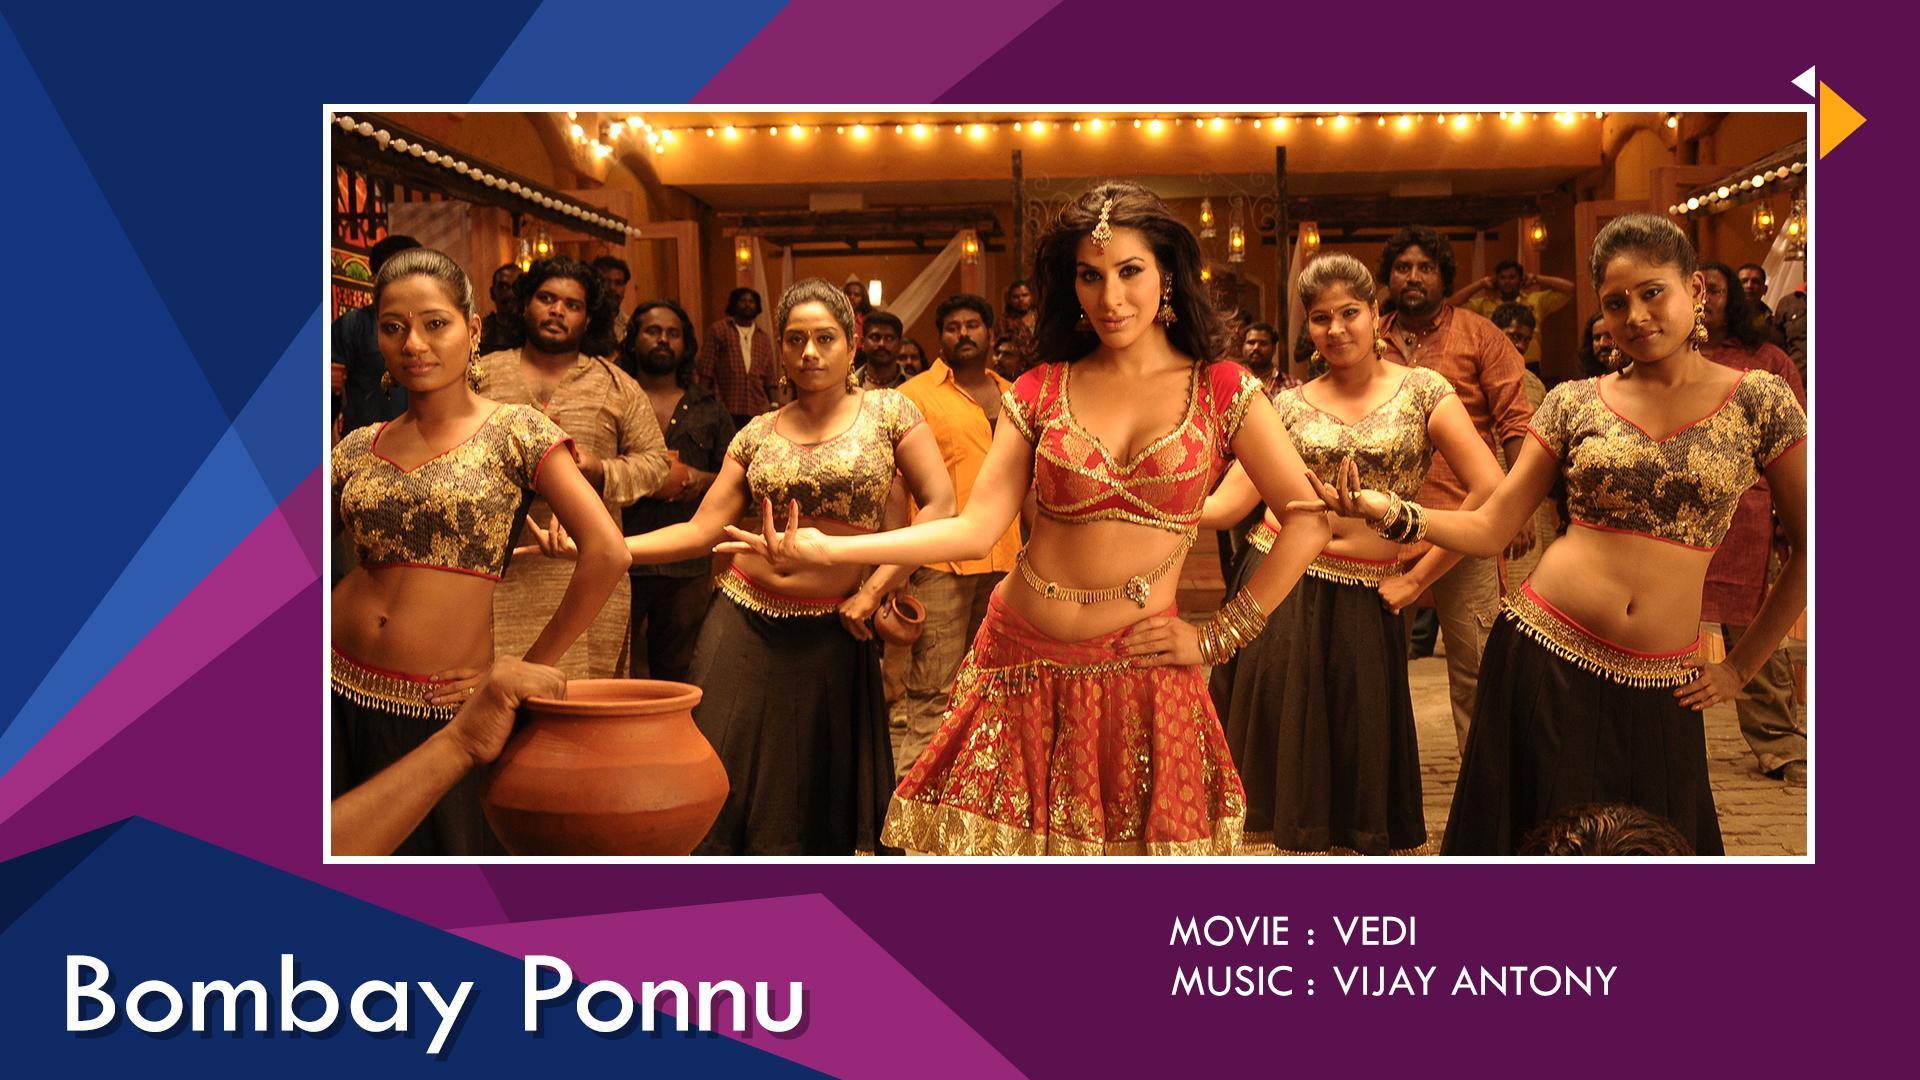 Bombay ponnu song